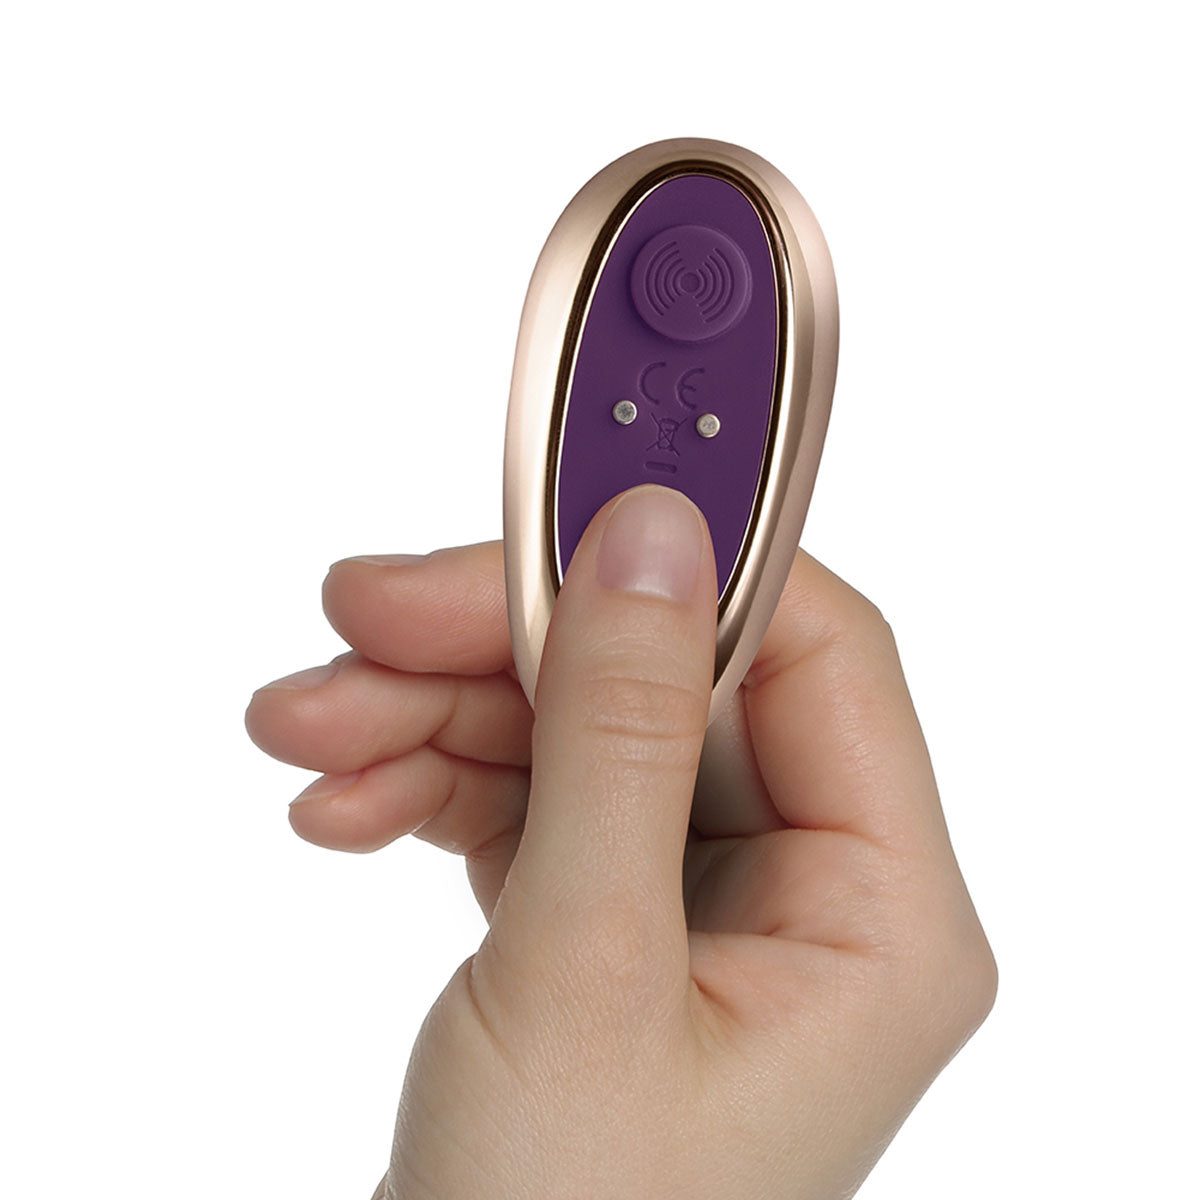 Petite Sensations Discover Silicone Anal Vibrator Purple - Zateo Joy